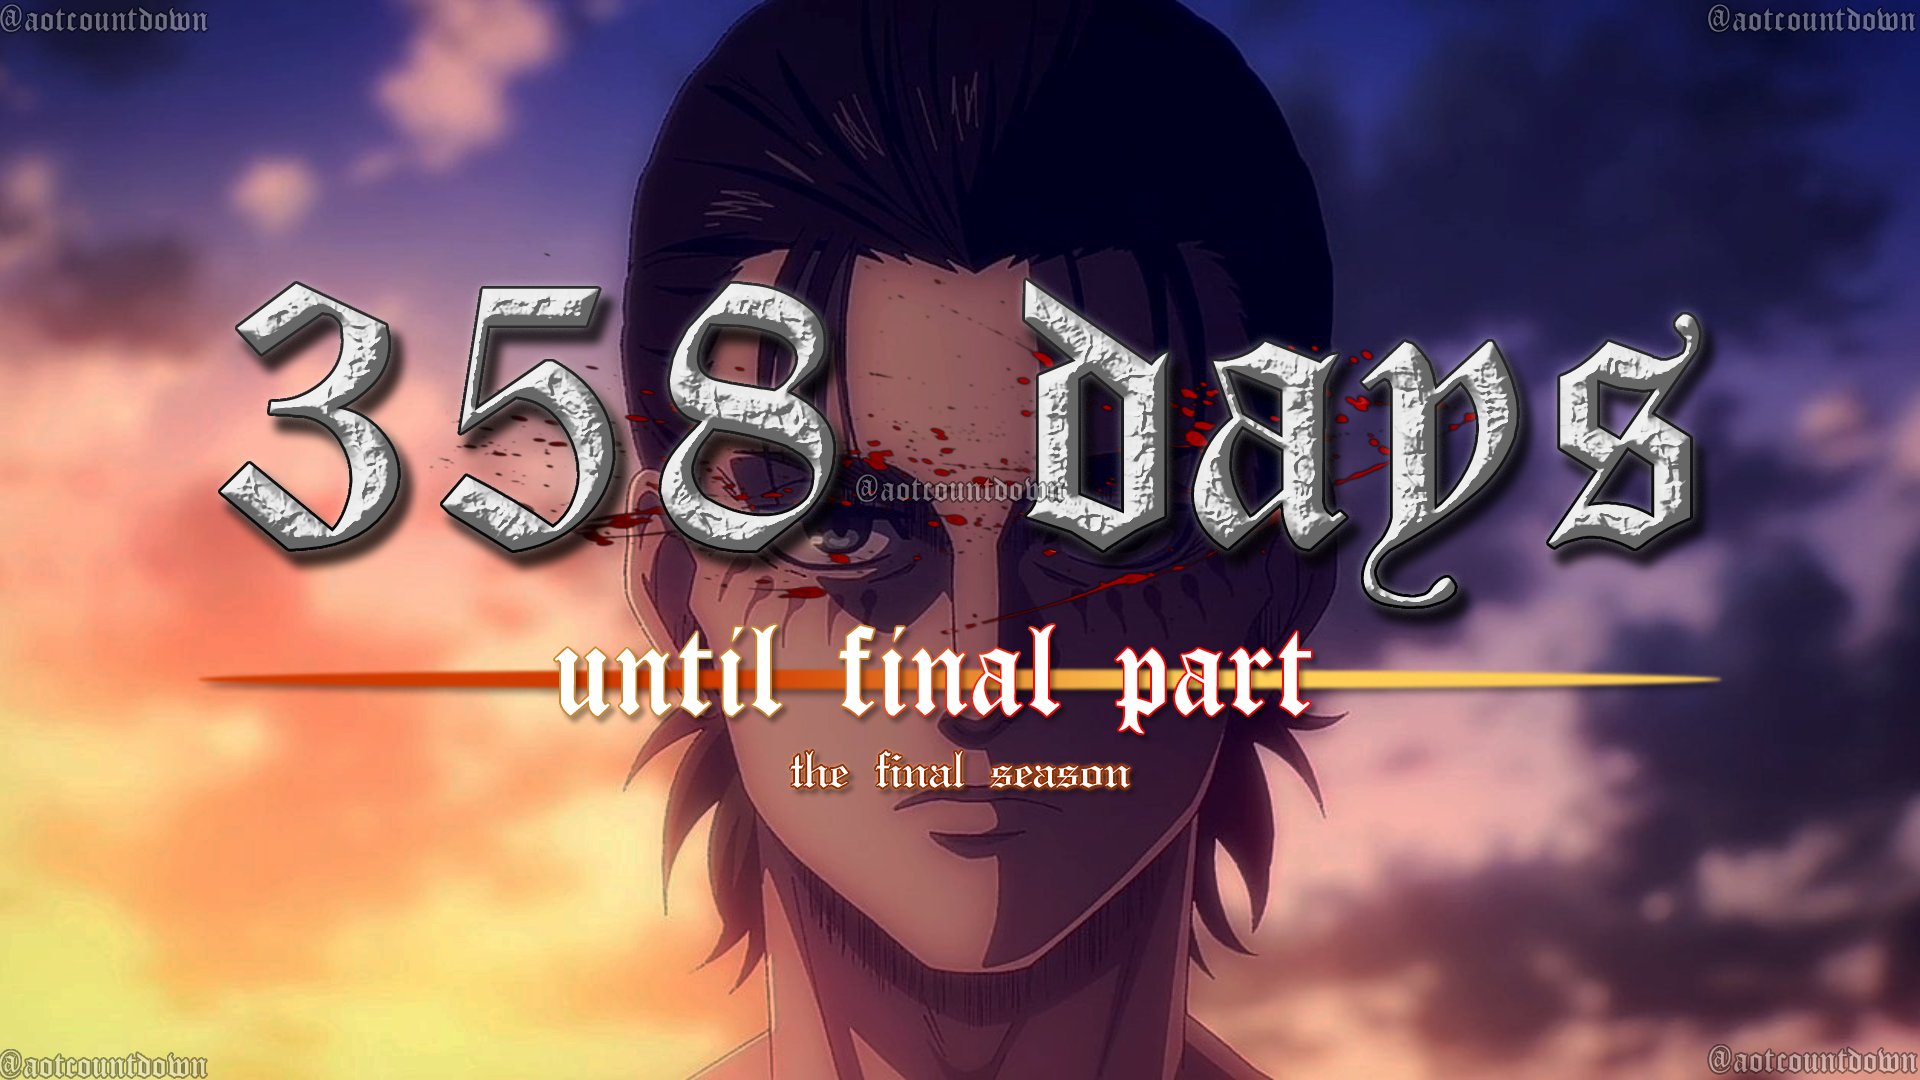 Countdown to Attack on Titan finale